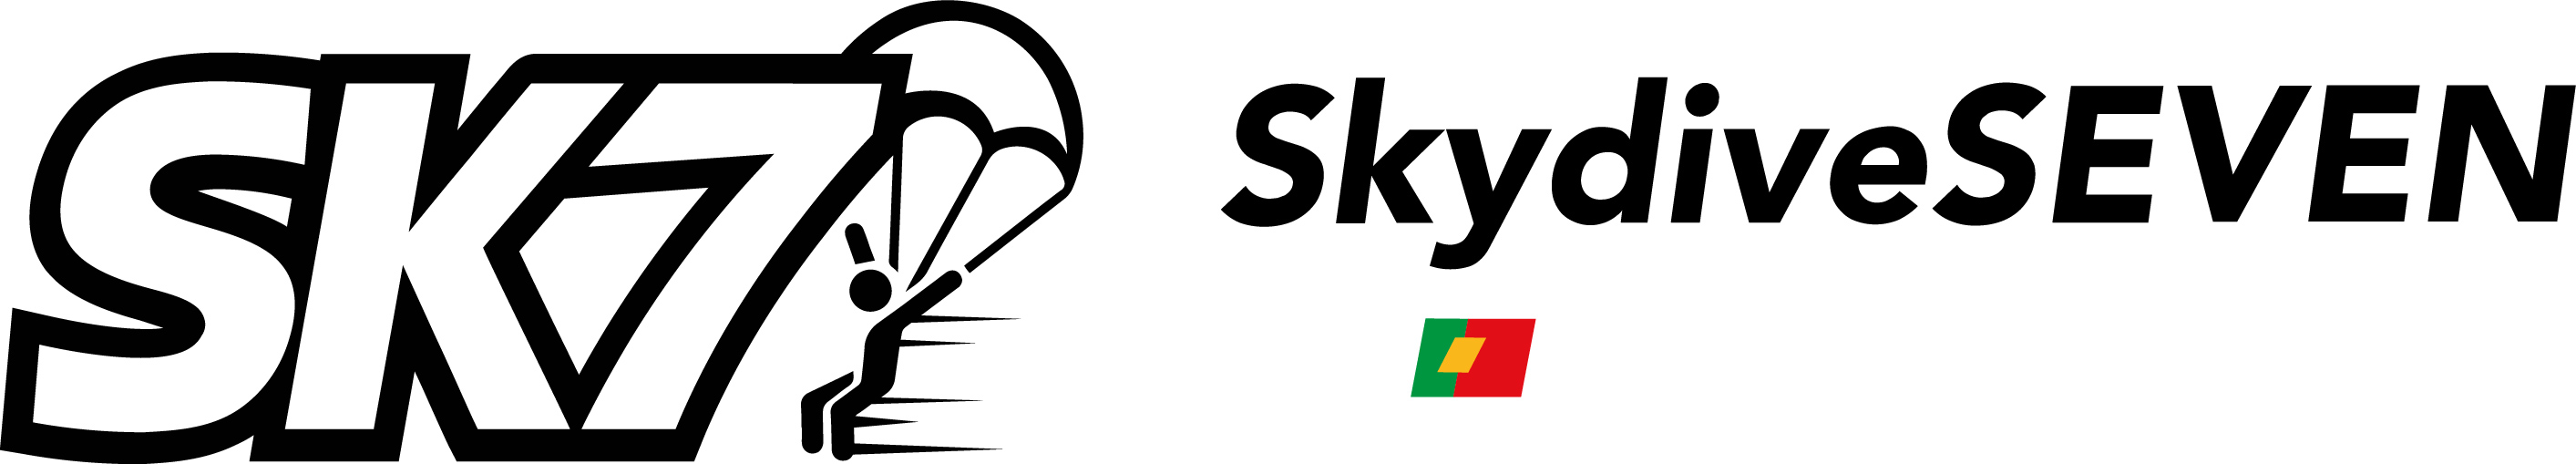 Skydive Seven logo